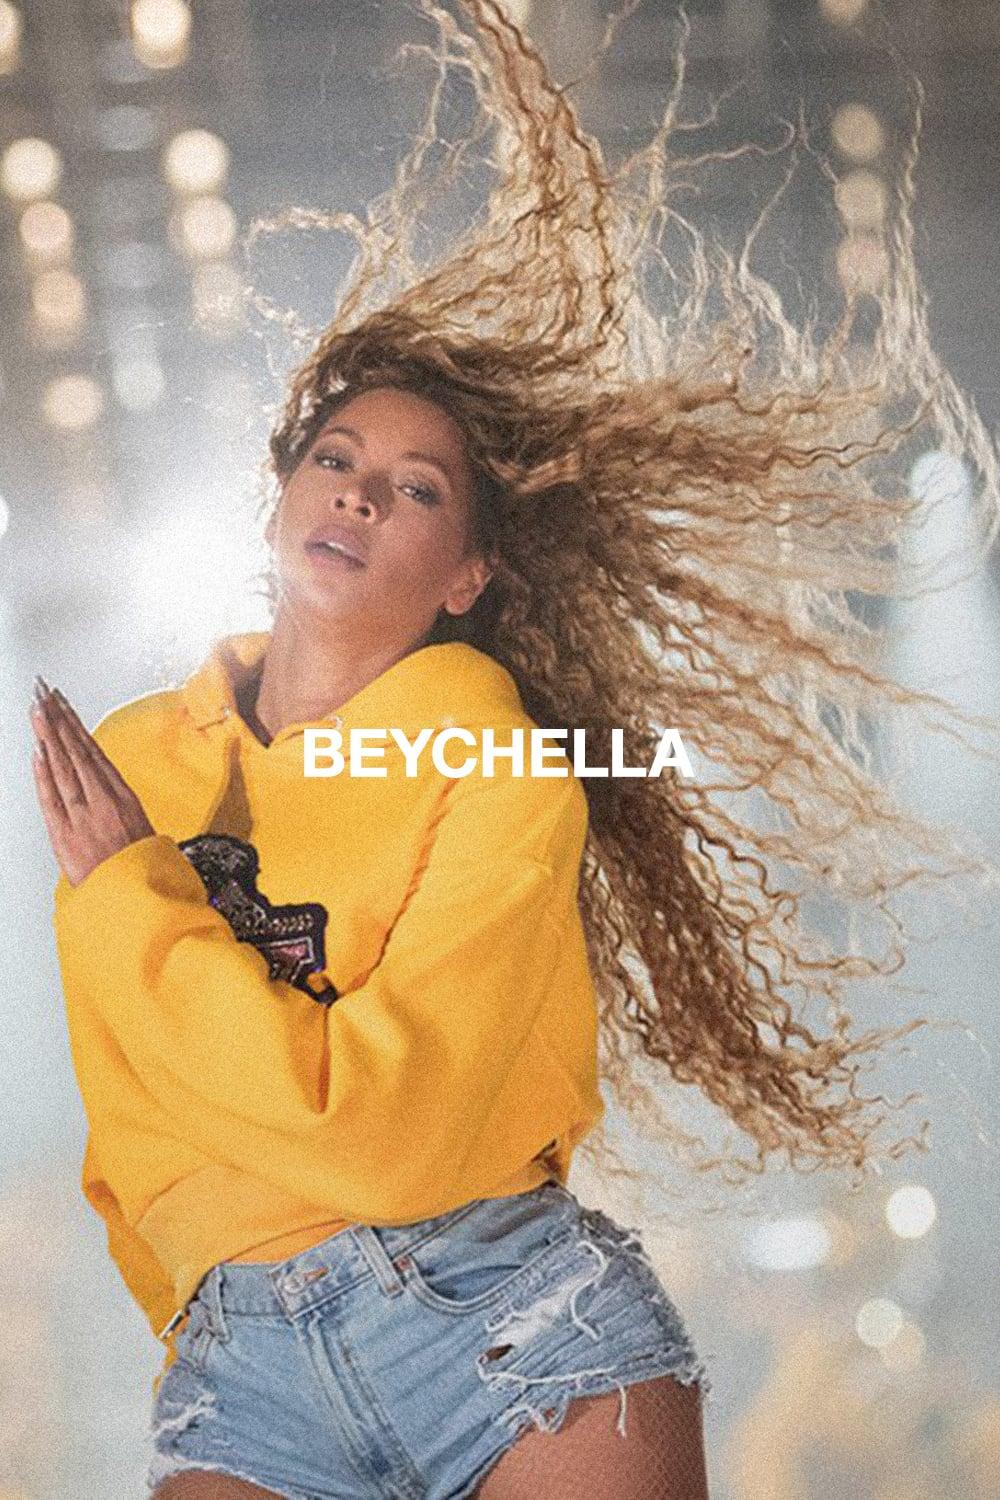 Beyonce Homecoming Wallpapers